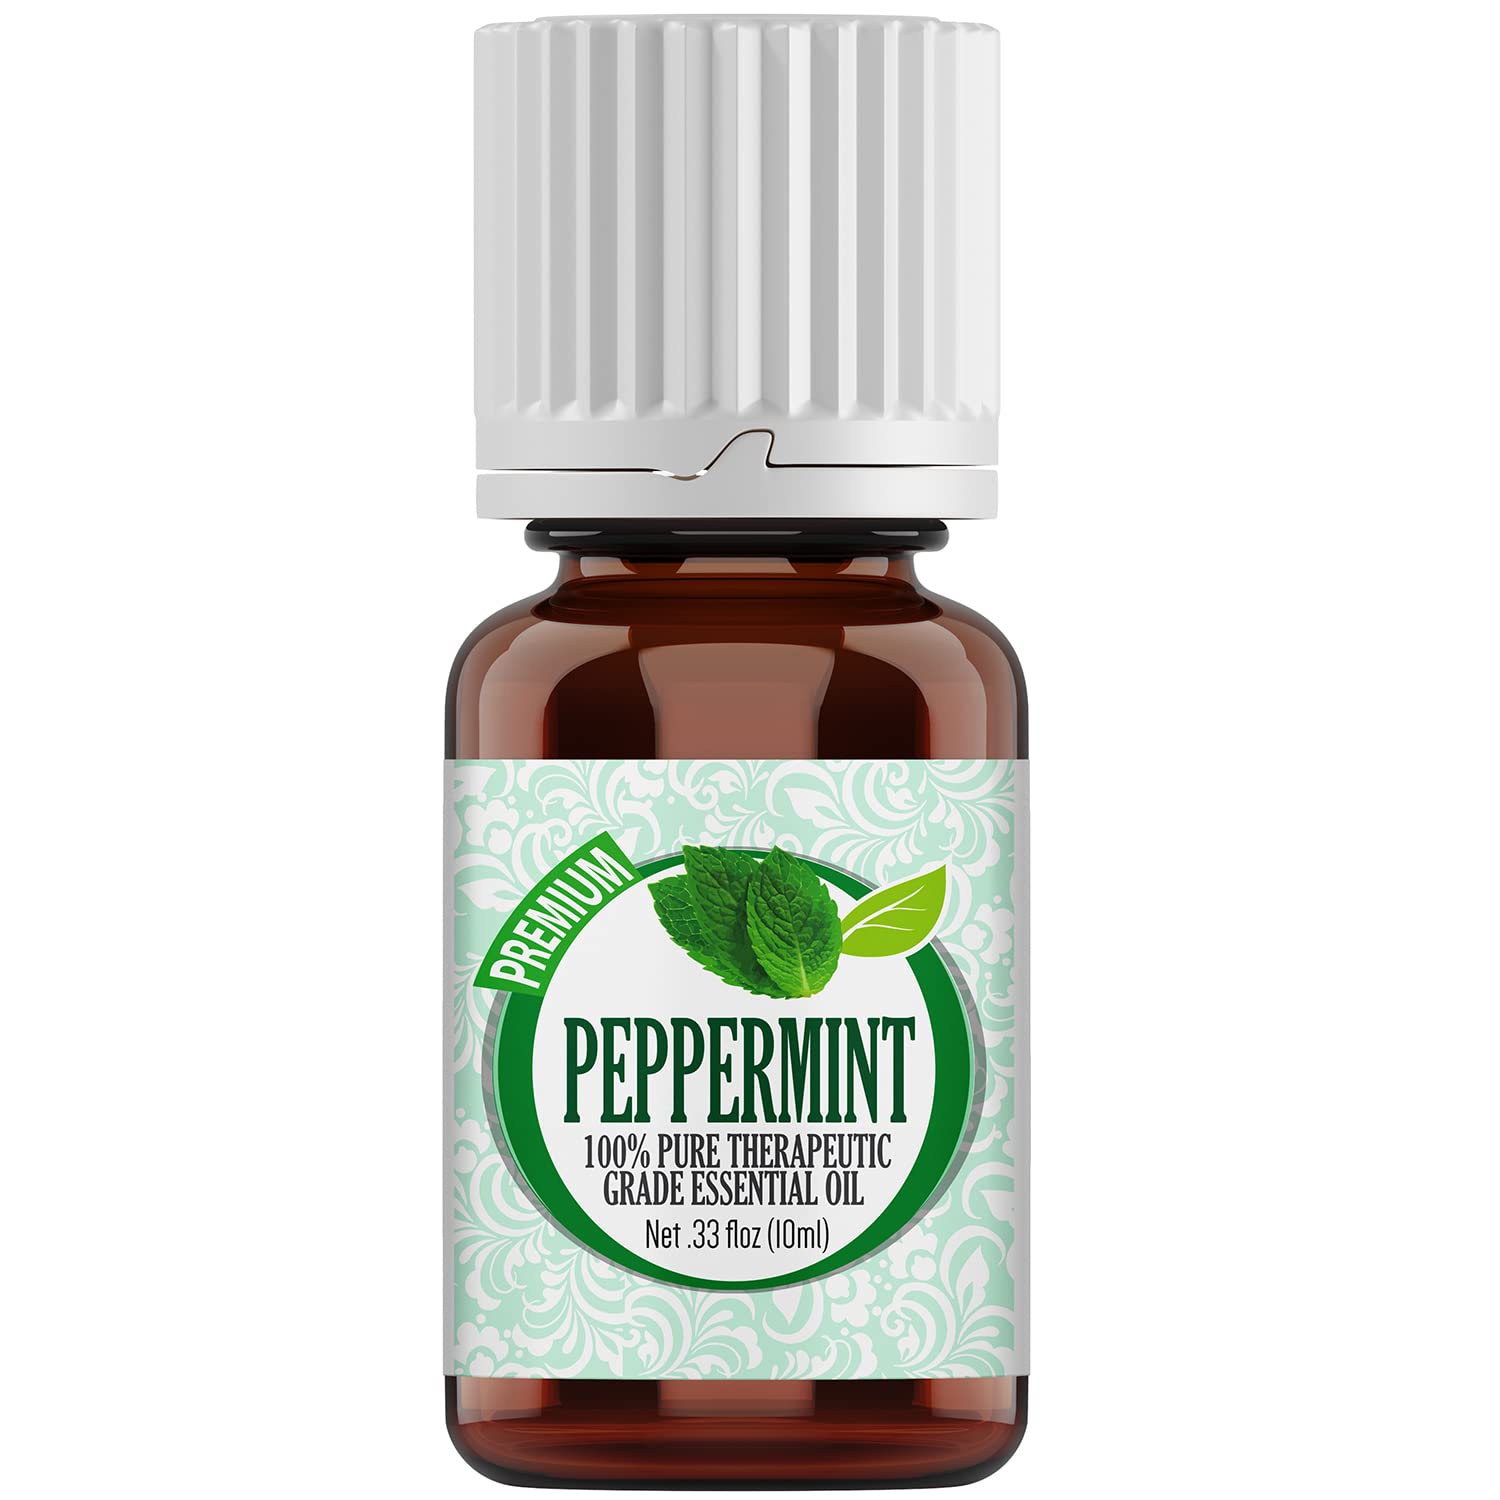 Healing Solutions 10ml Oils - Peppermint Essential Oil - 0.33 Fluid Ounces